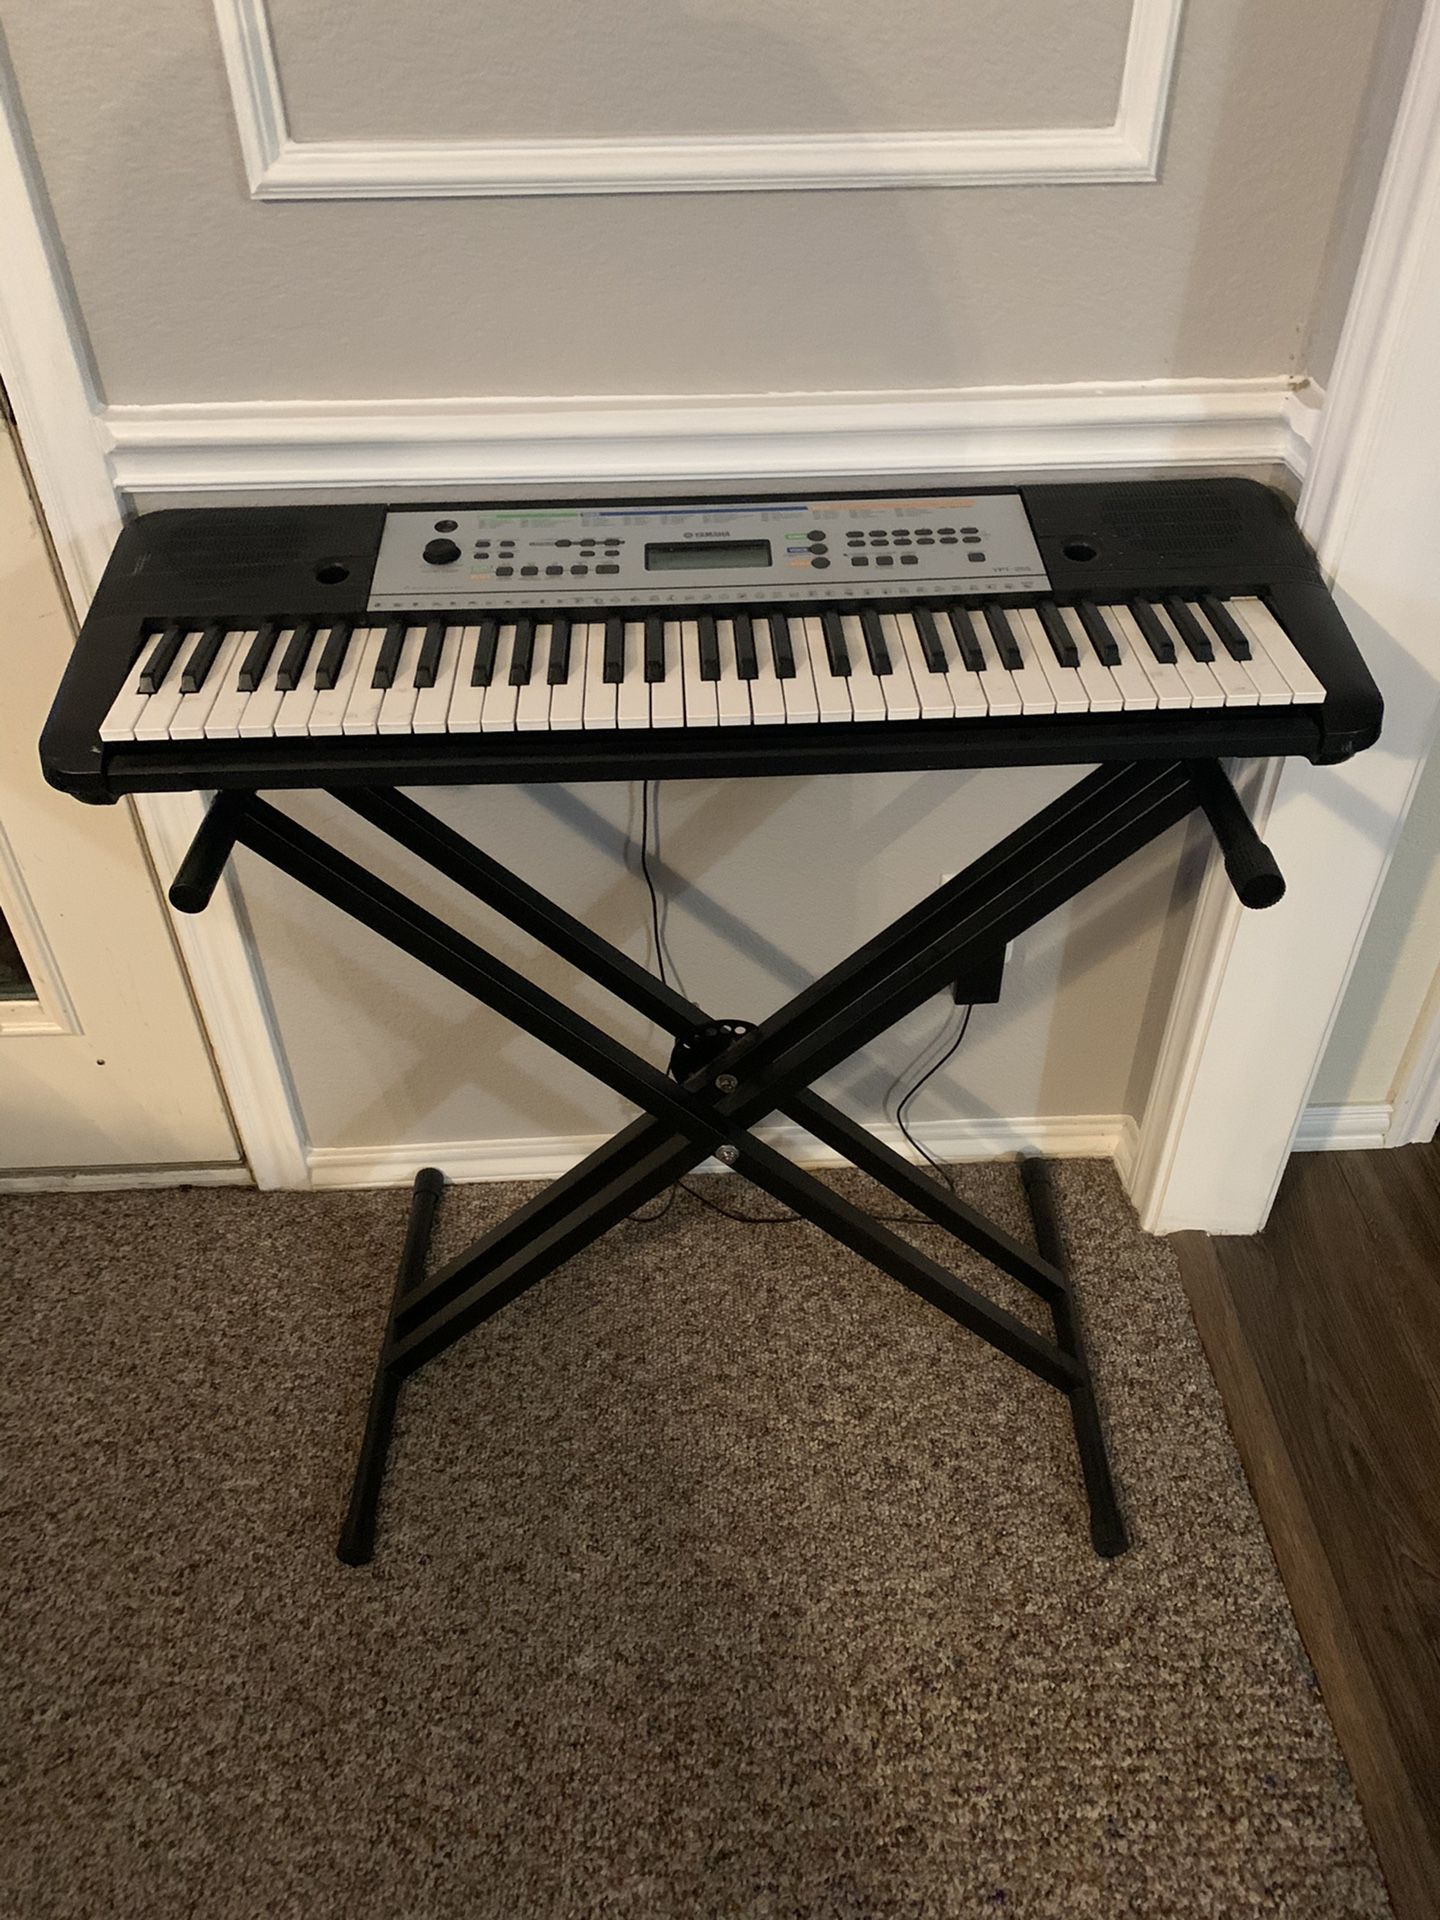 Yamaha keyboard and stand